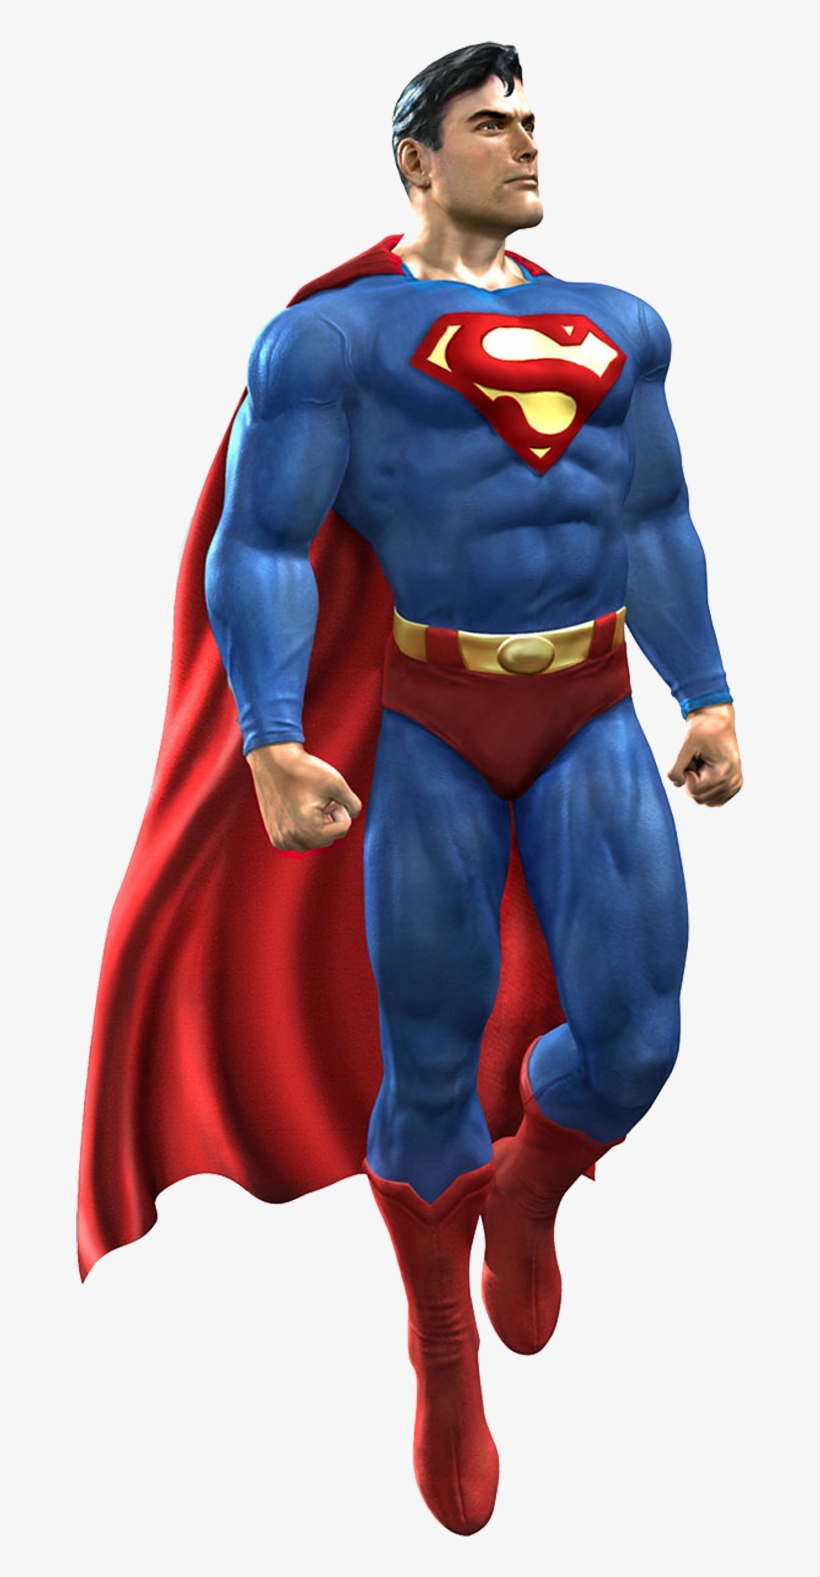 Superman - Superman Png, transparent png #17654